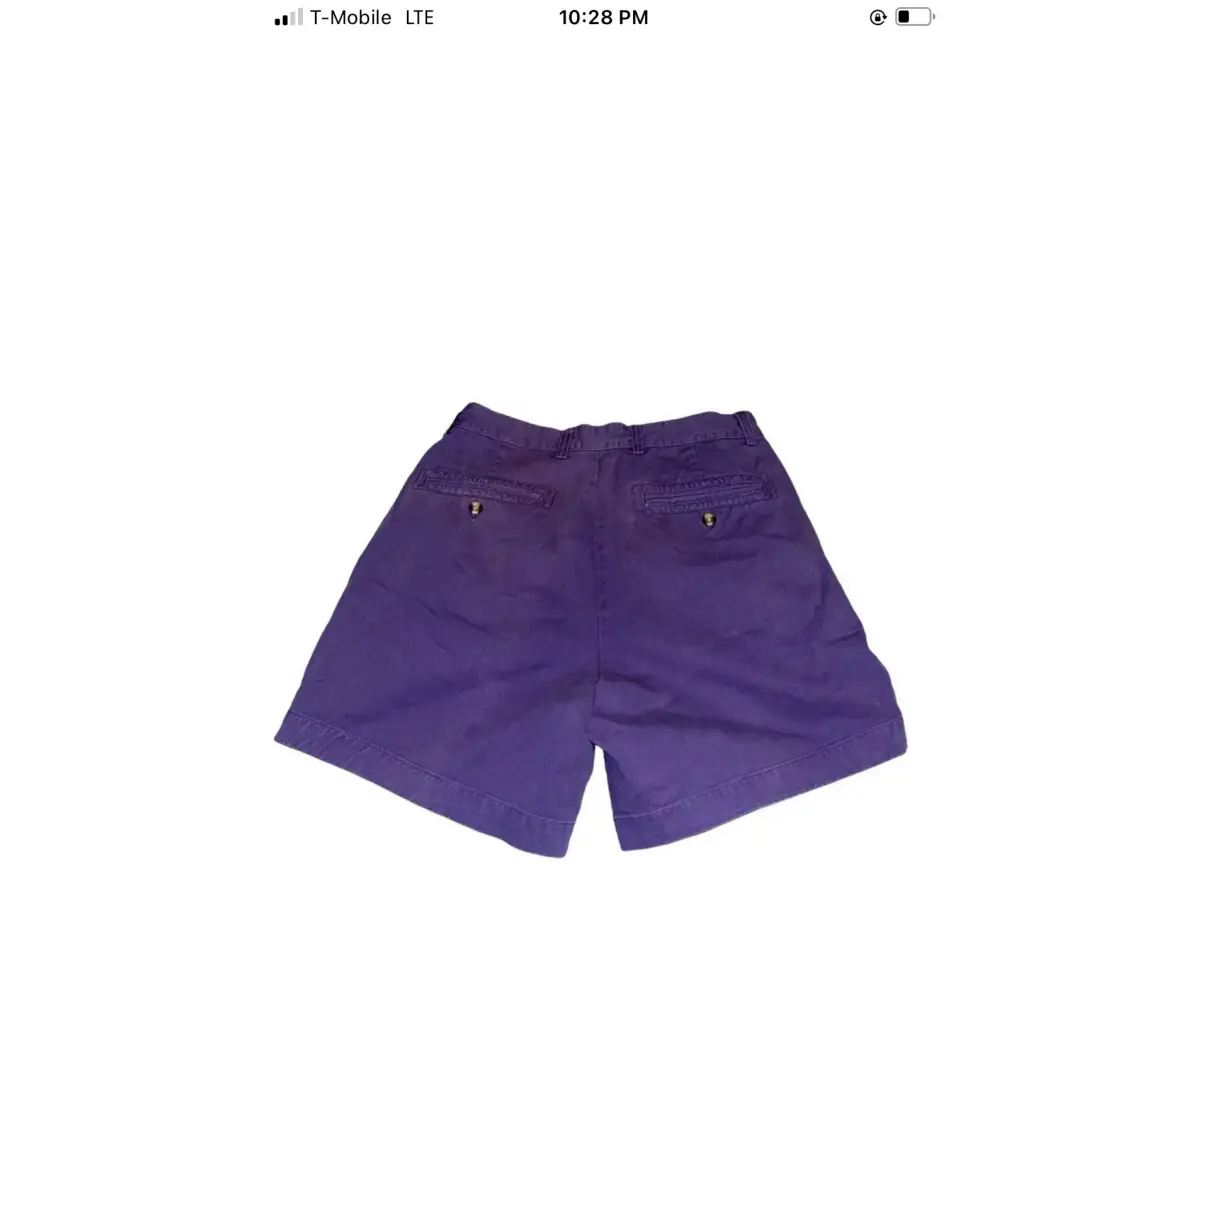 Buy Dior Homme Shorts online